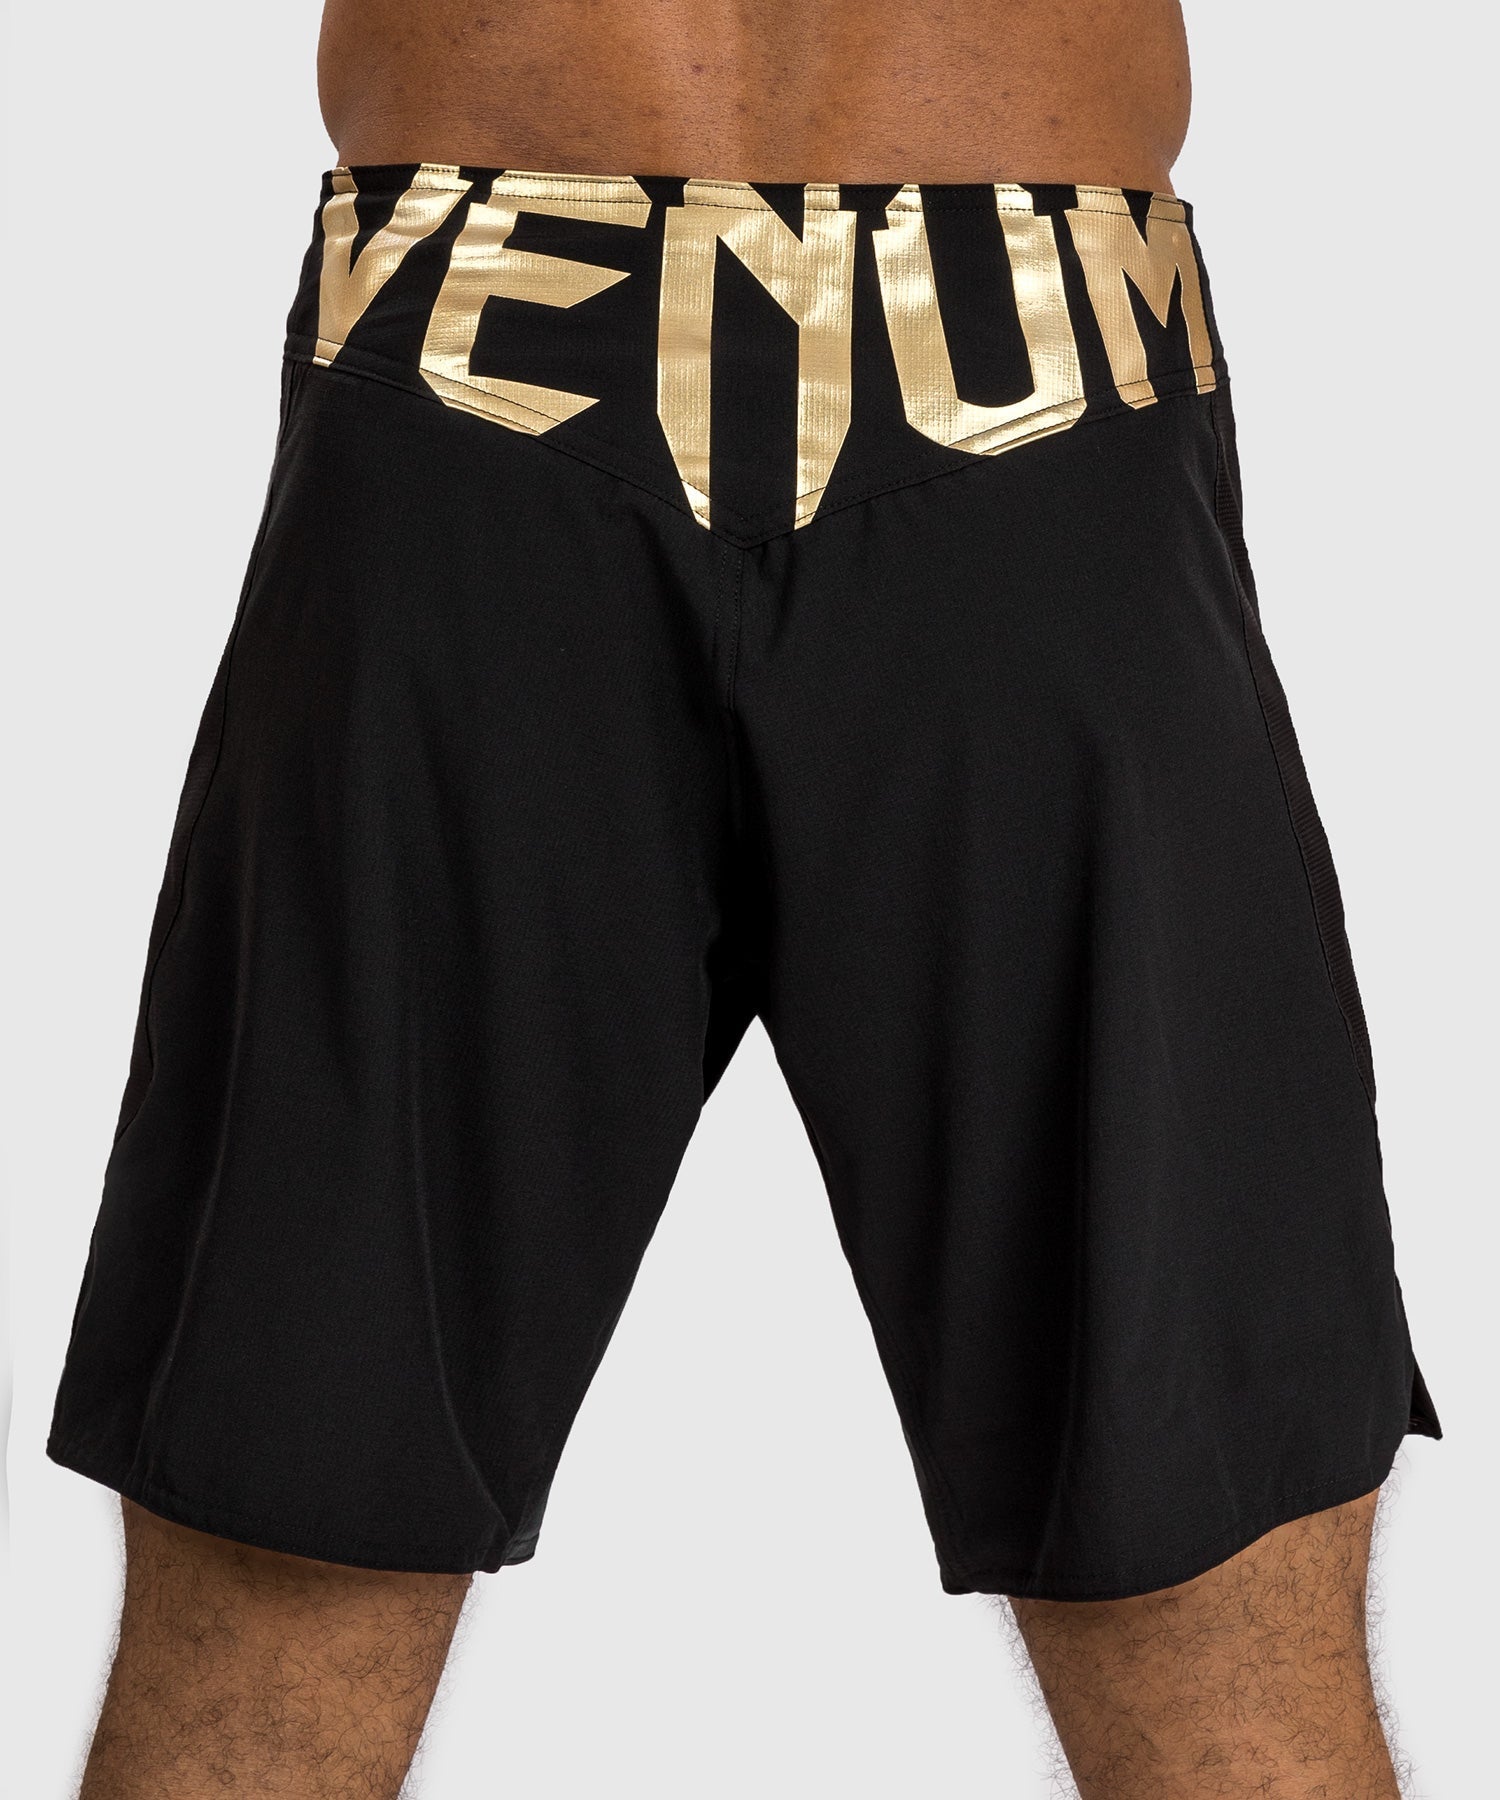 Shorts de MMA Venum Lumière 5.0